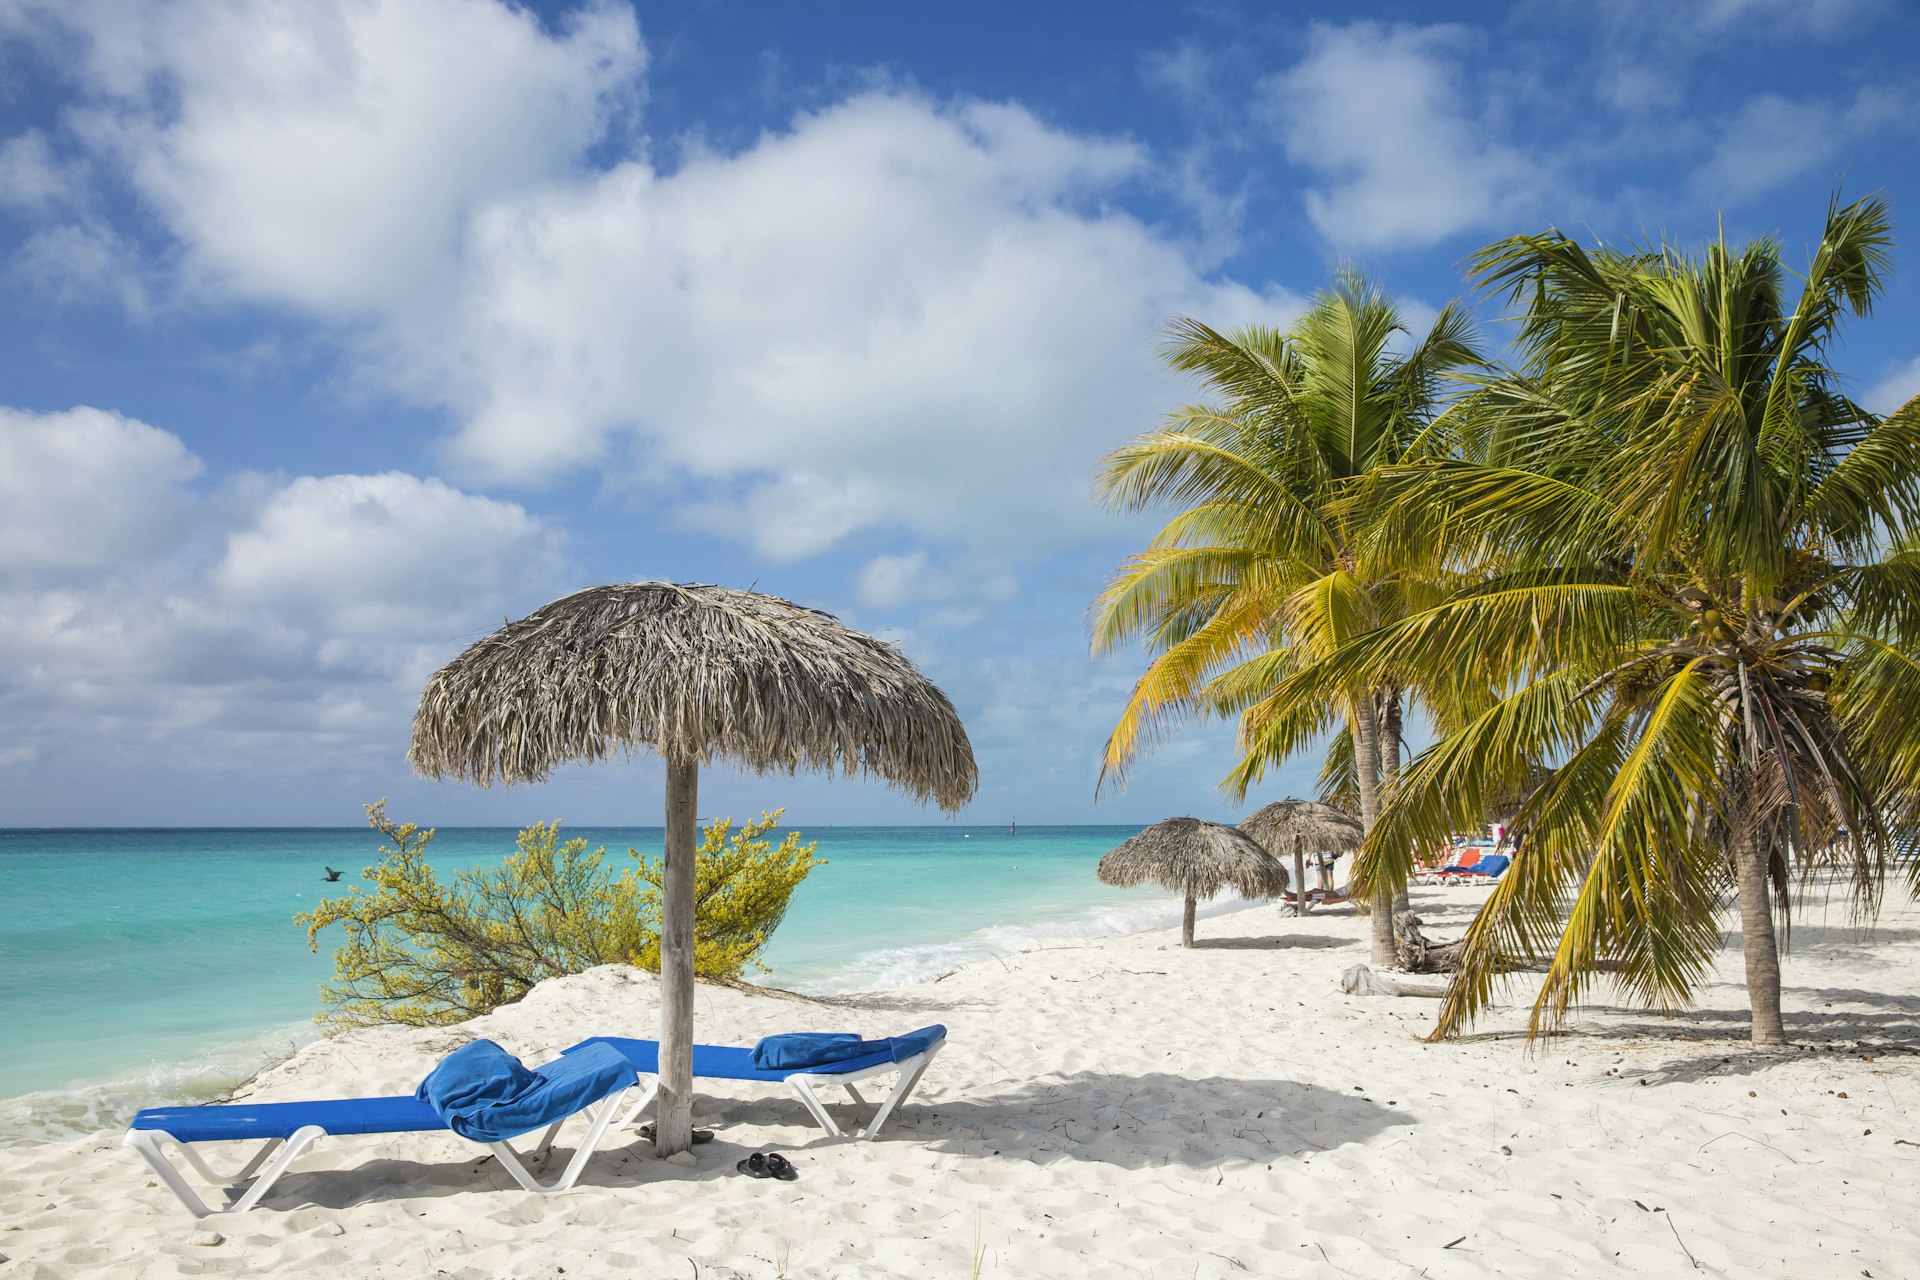 A few beach loungers are arranged under a palm tree parasol on the white-sand beach of Playa Isla de la Juventud, Cuba